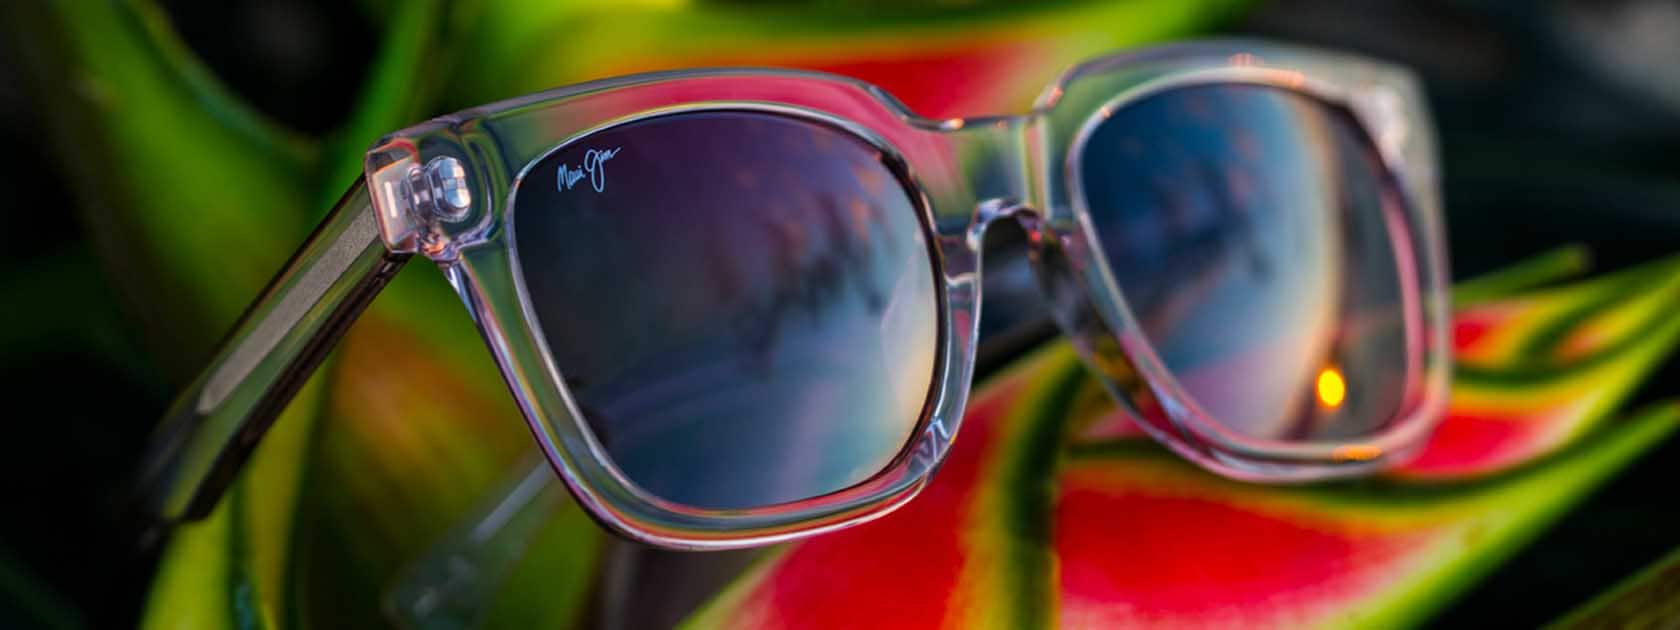 montatura di occhiali da sole trasparente con lenti rosa mostrata supra a foglie tropicali verdi e rosse